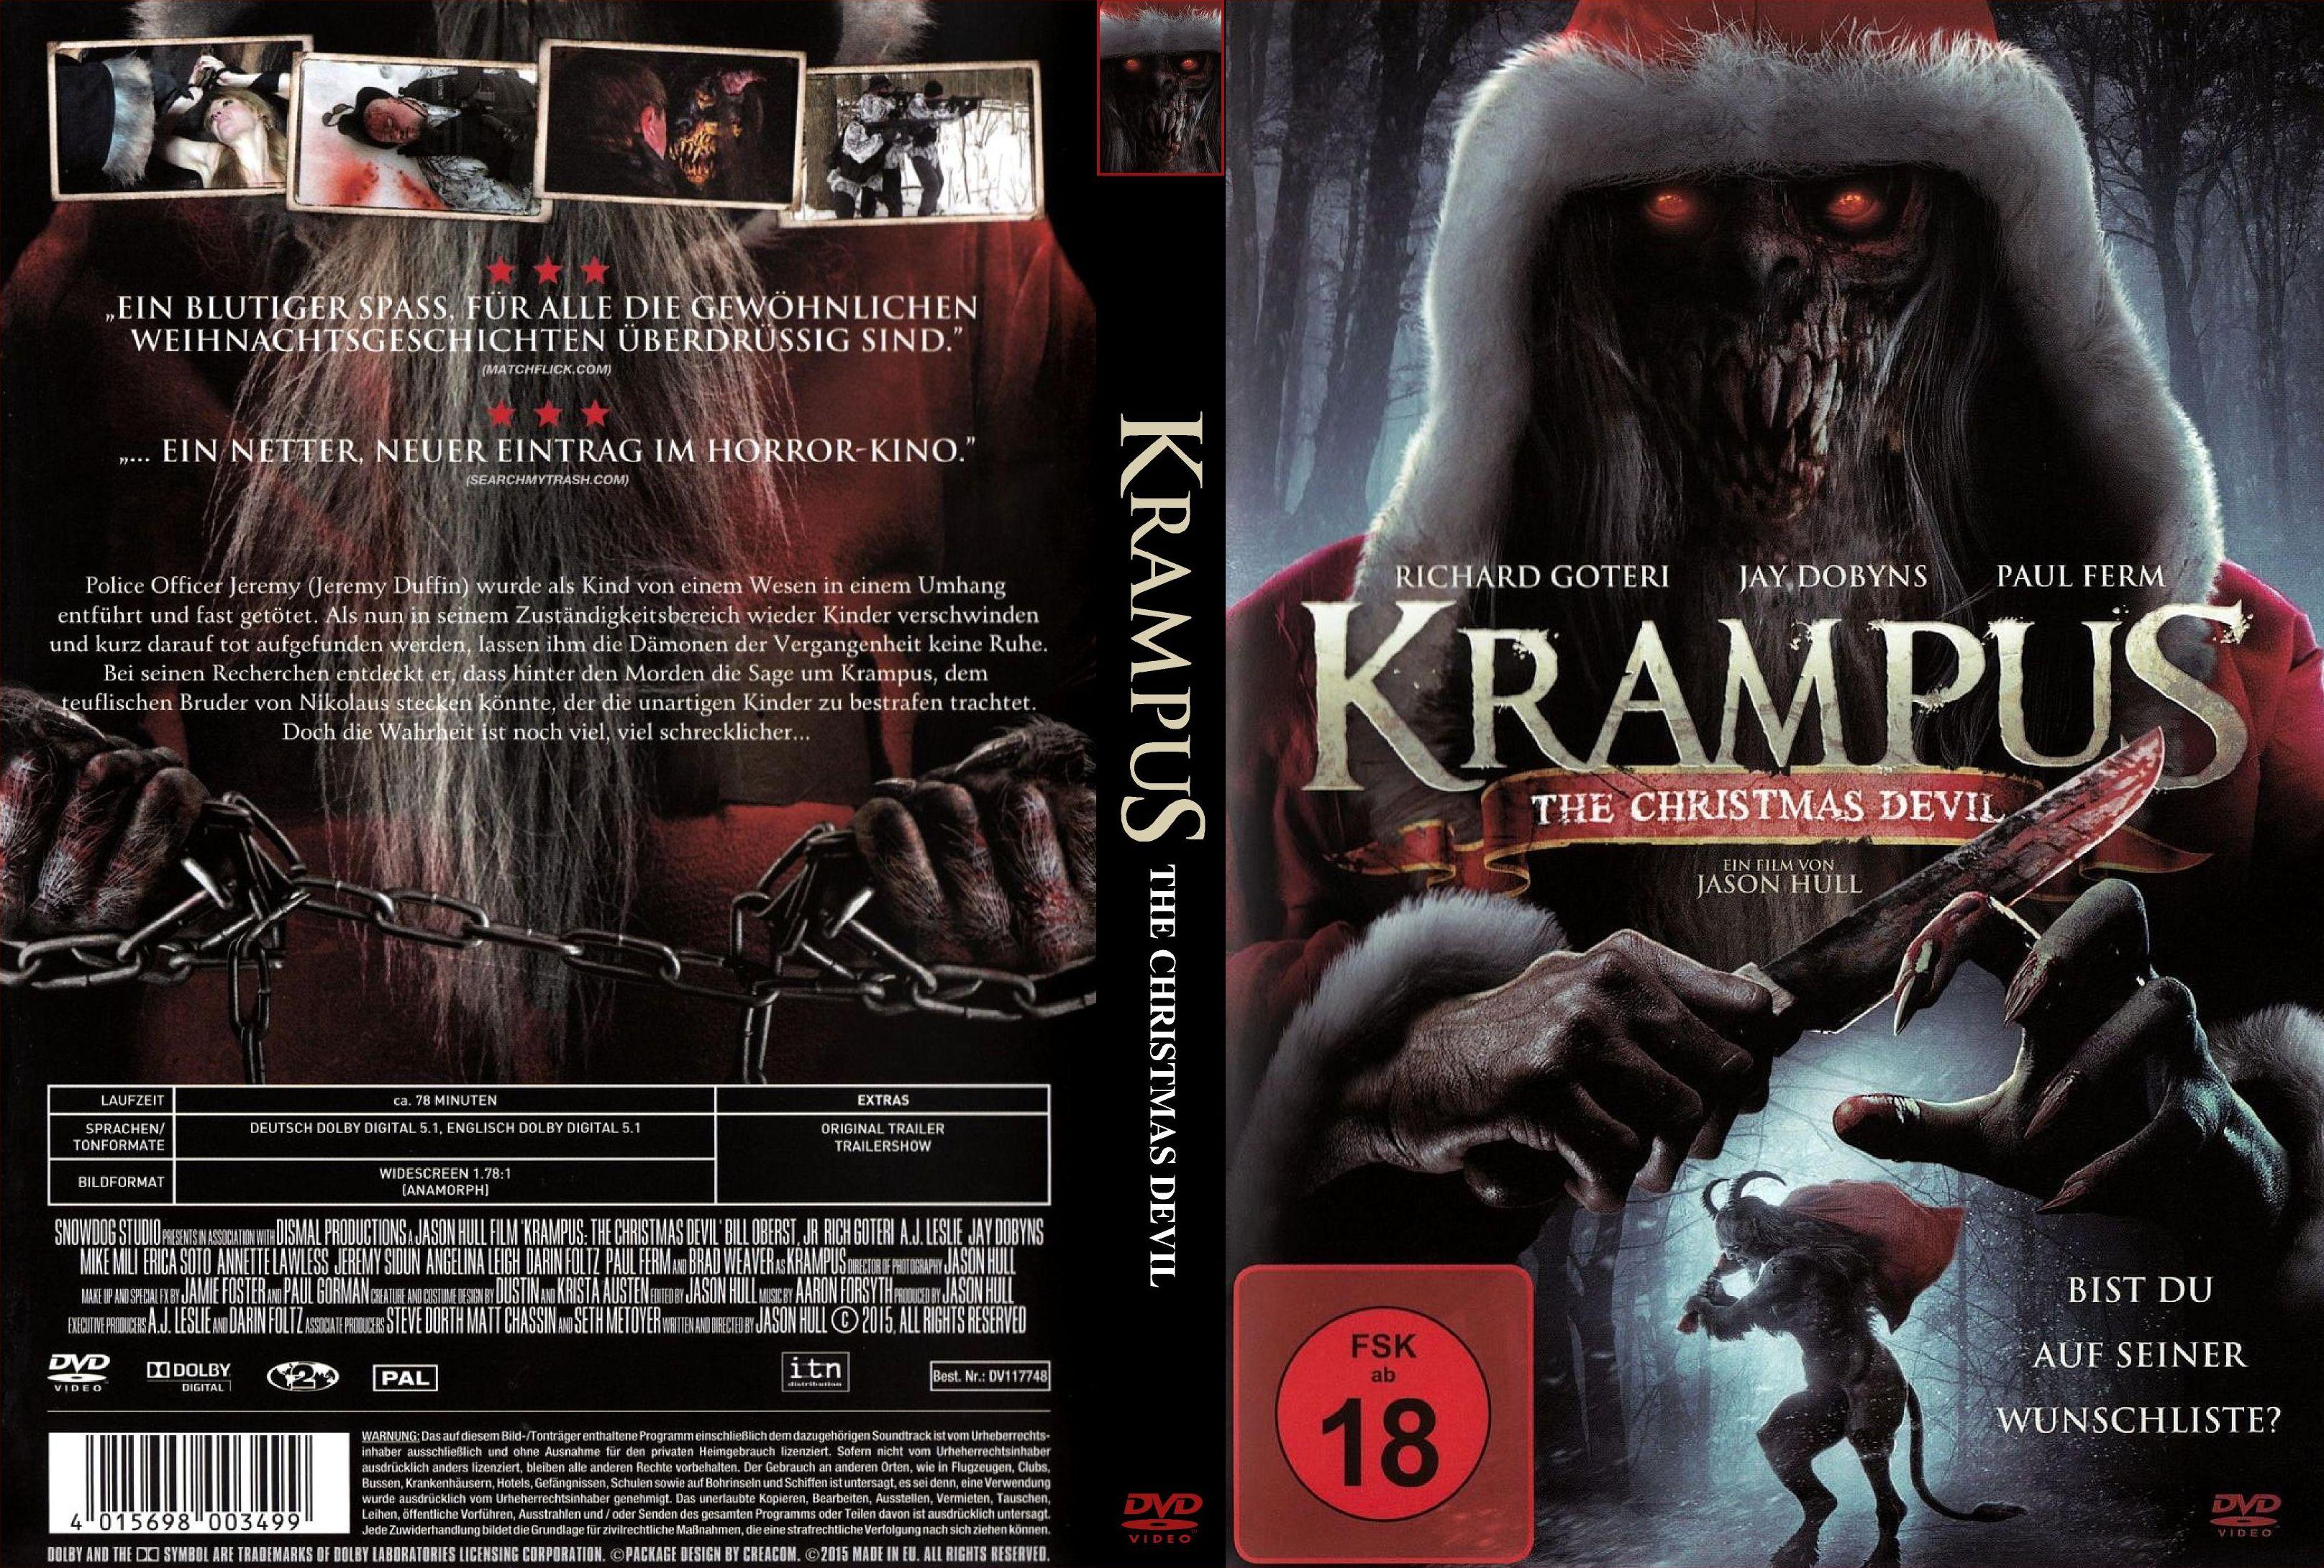 Krampus: The Christmas Devil HD wallpapers, Desktop wallpaper - most viewed